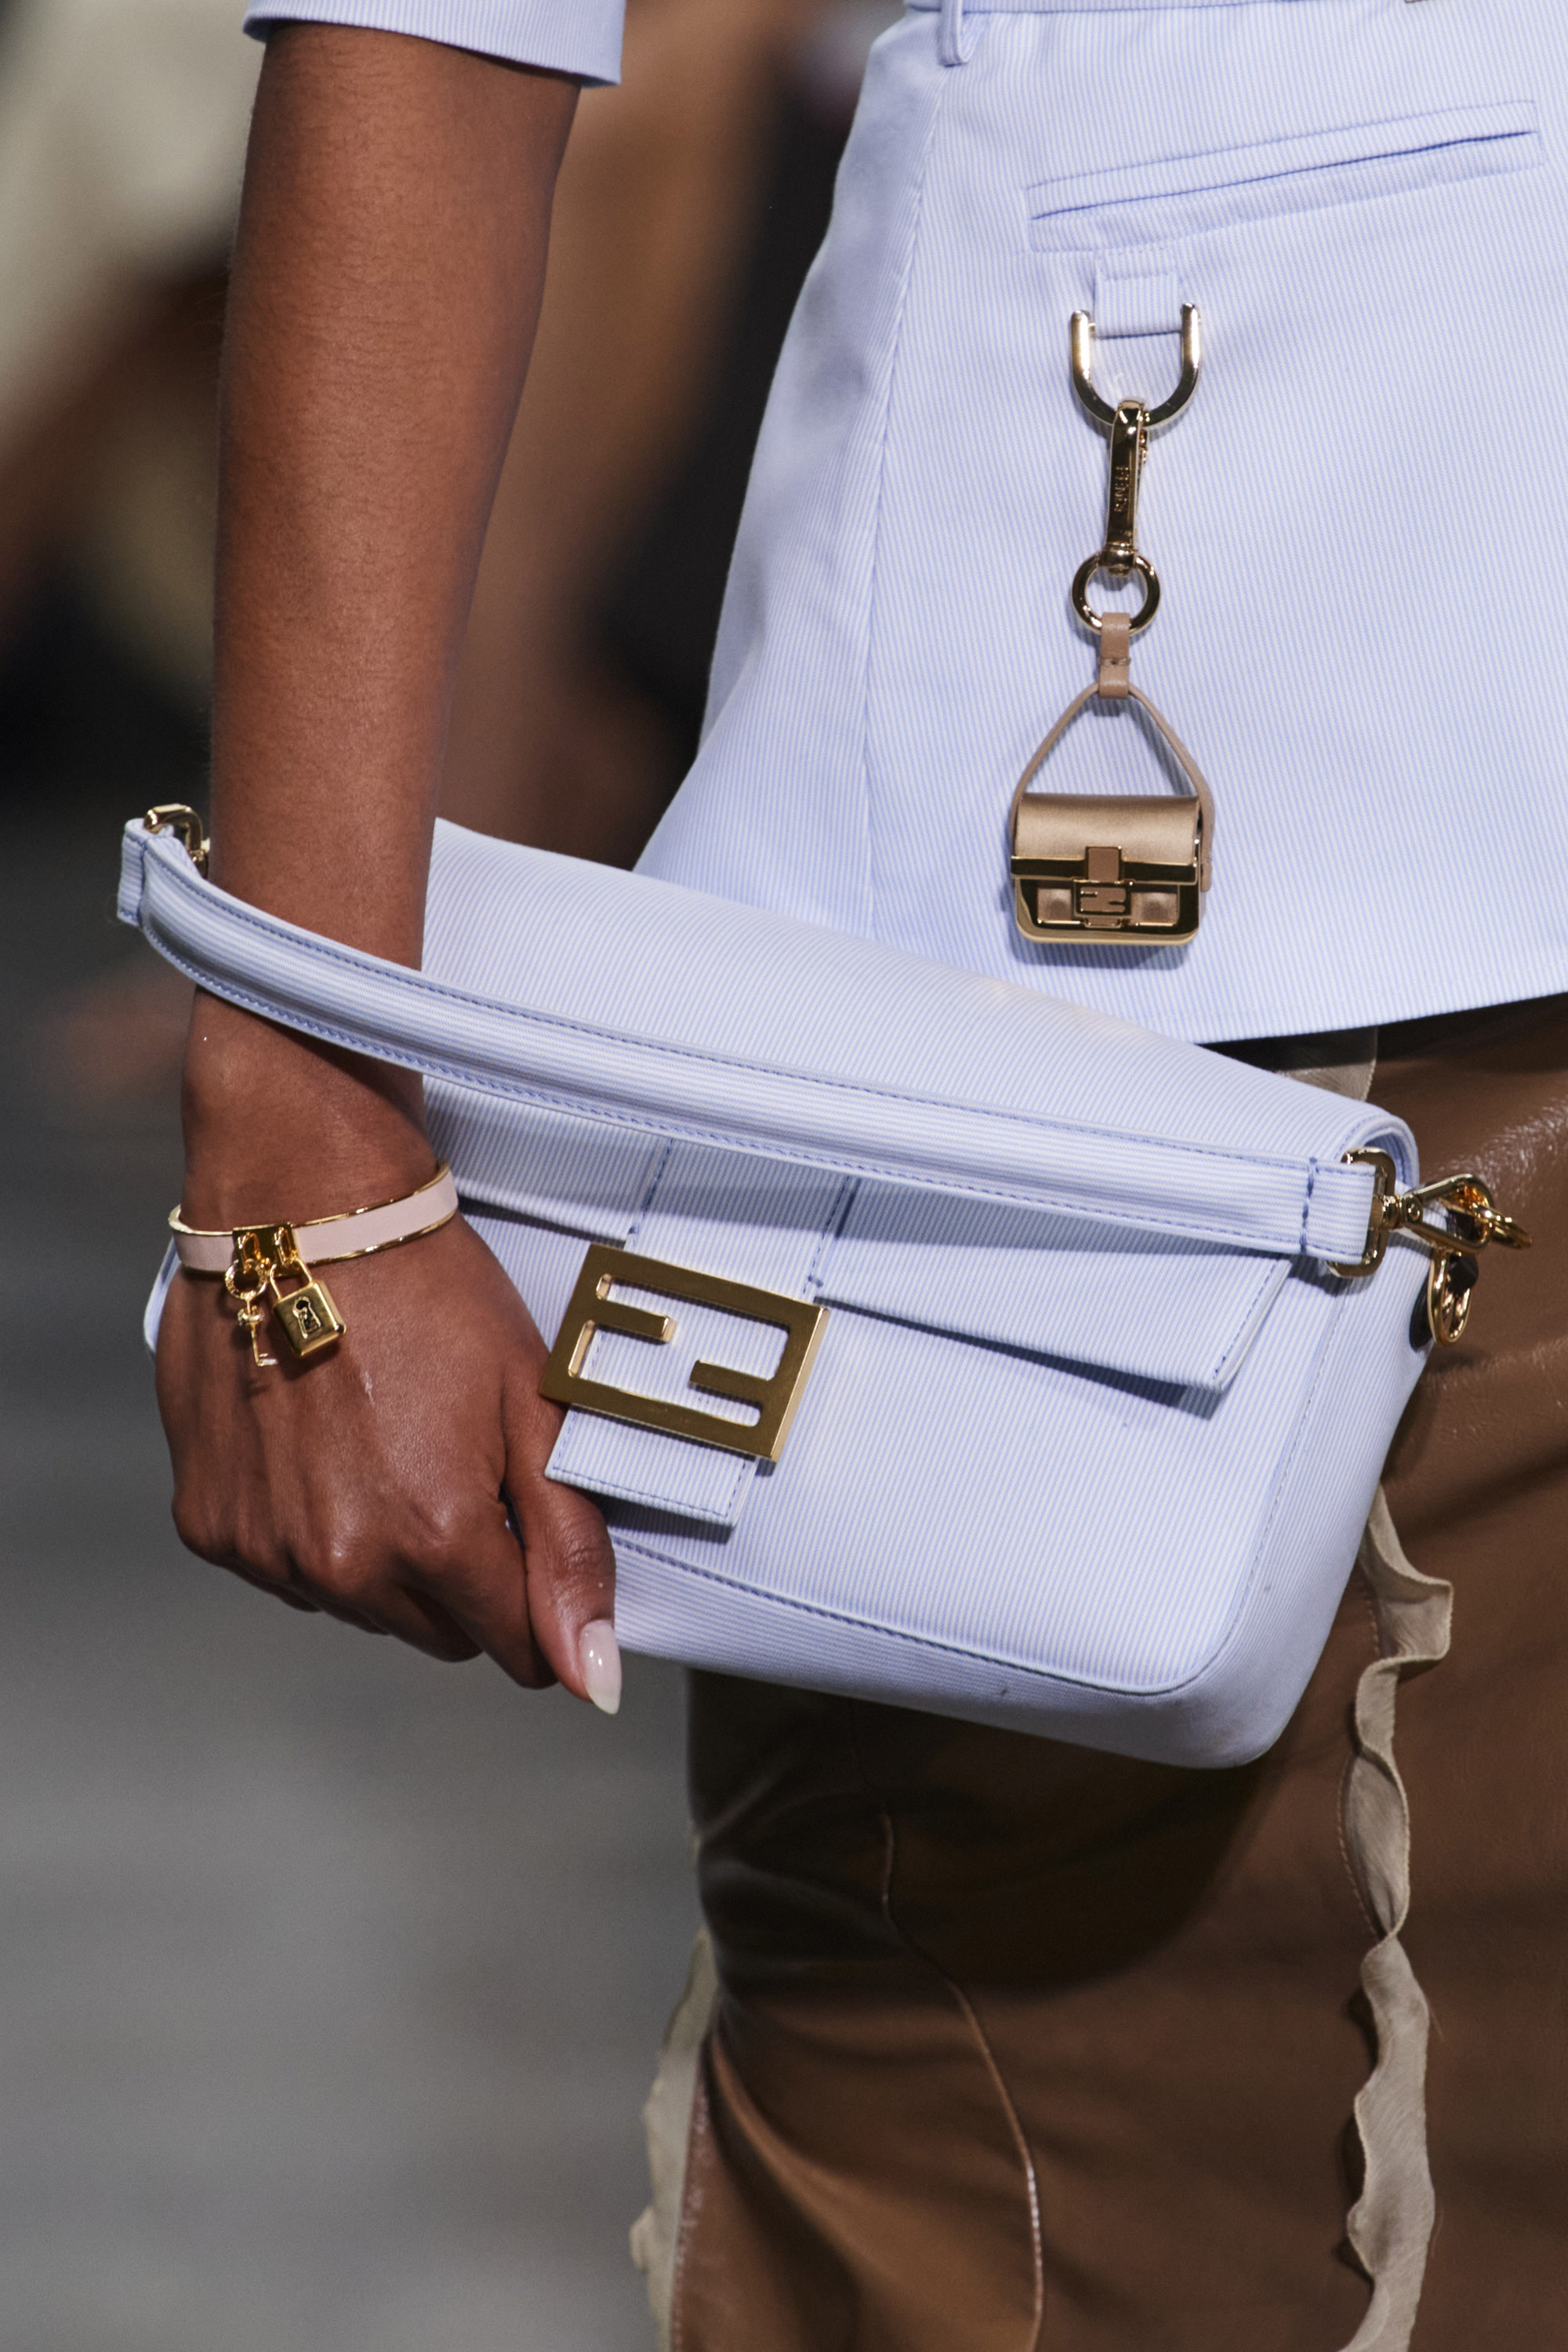 Fendi's Baguette: The most sought-after handbag turns 25, Culture